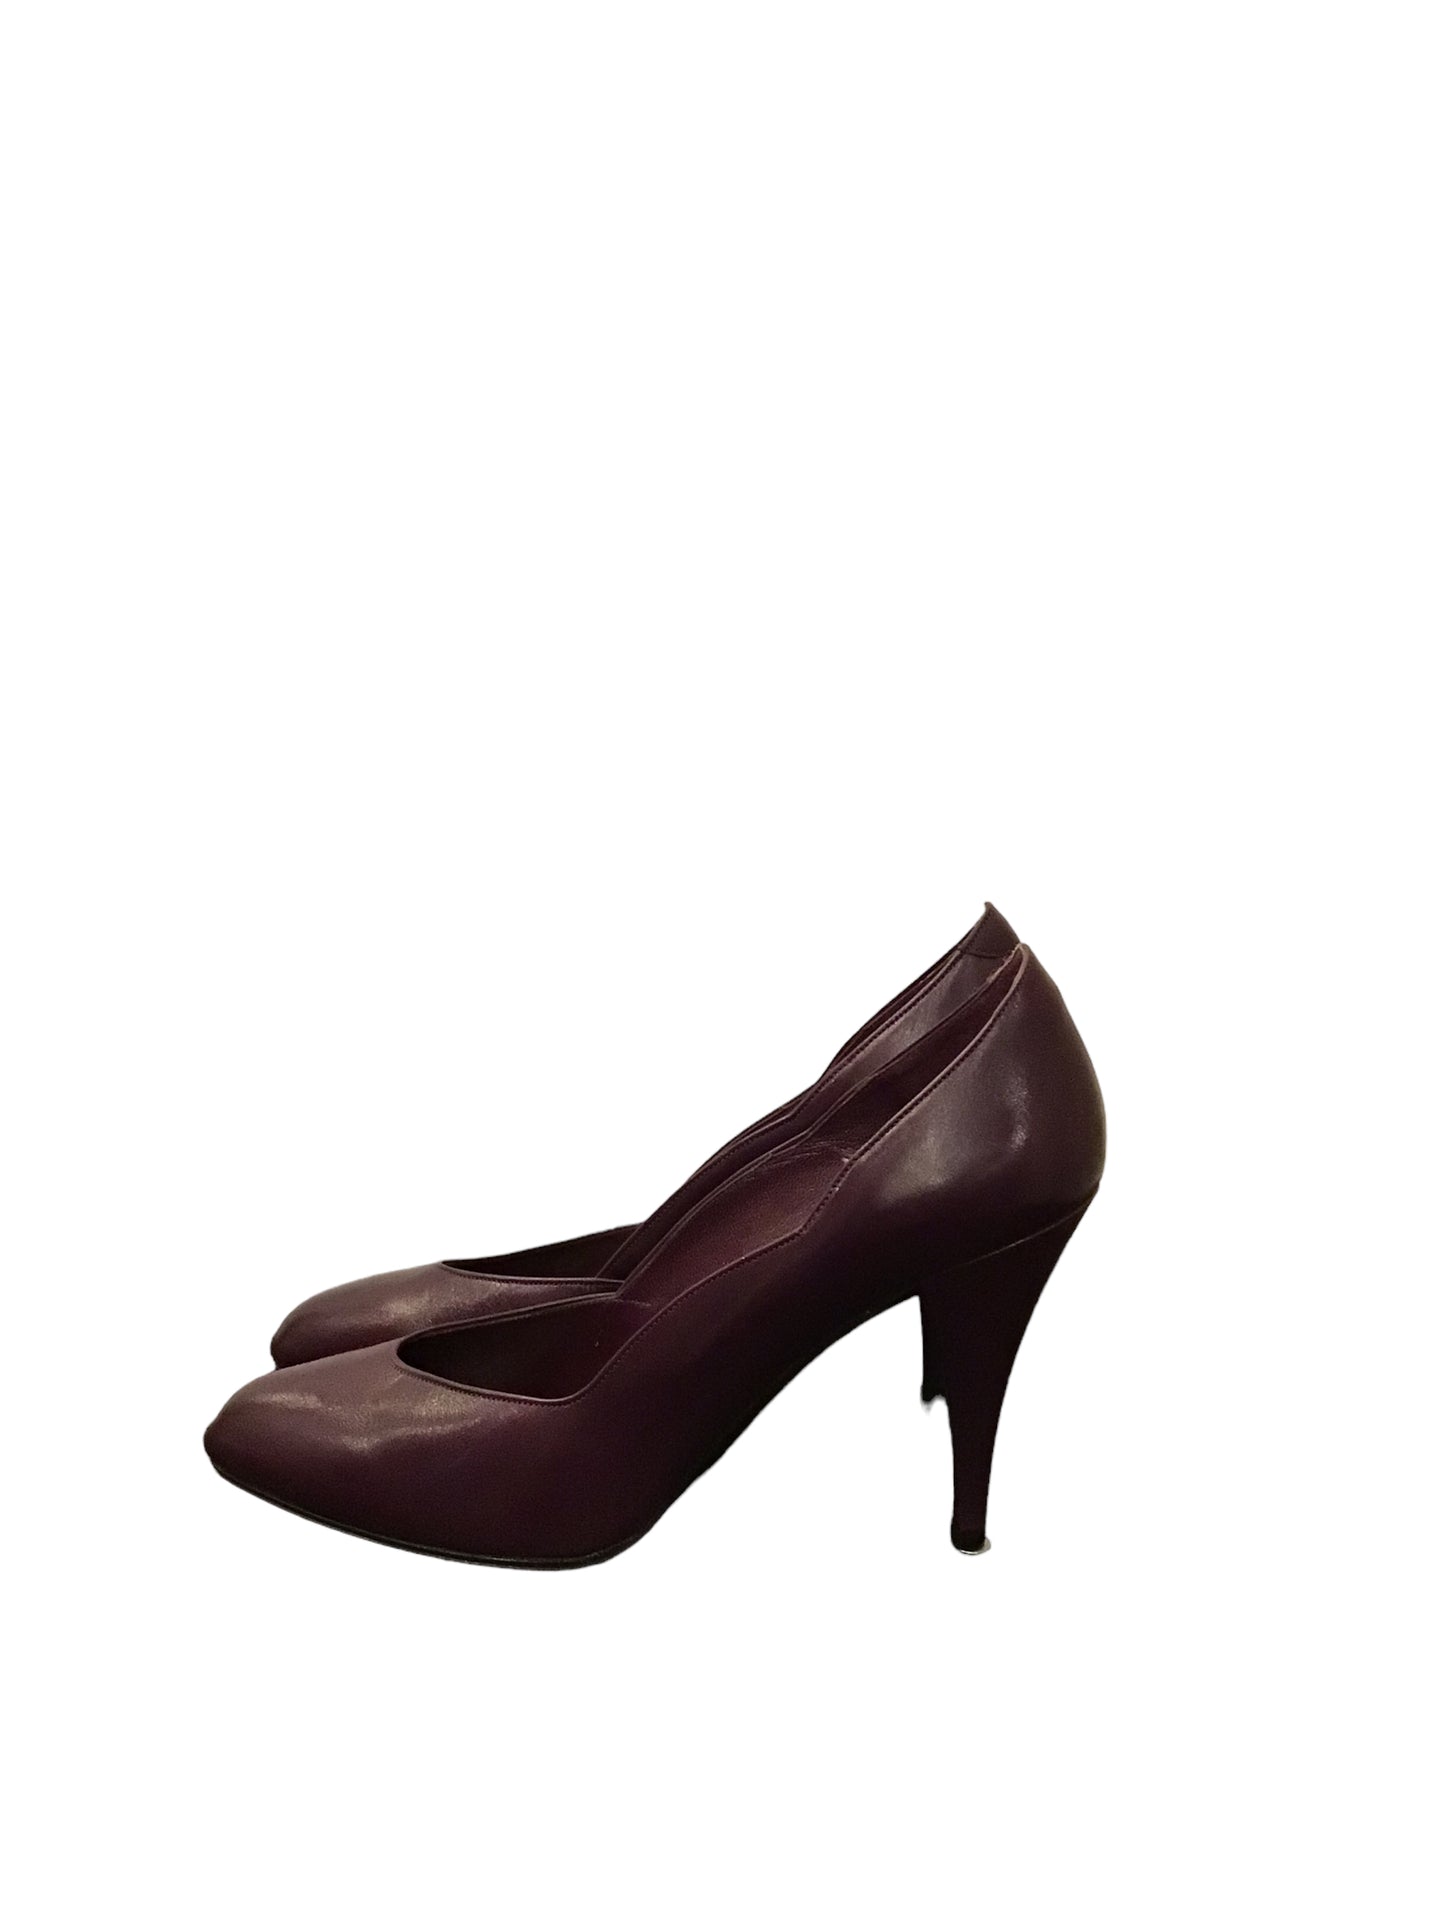 Women’s purple leather heeled shoes by Charles Jourdan (UK size 7 Euro 40)